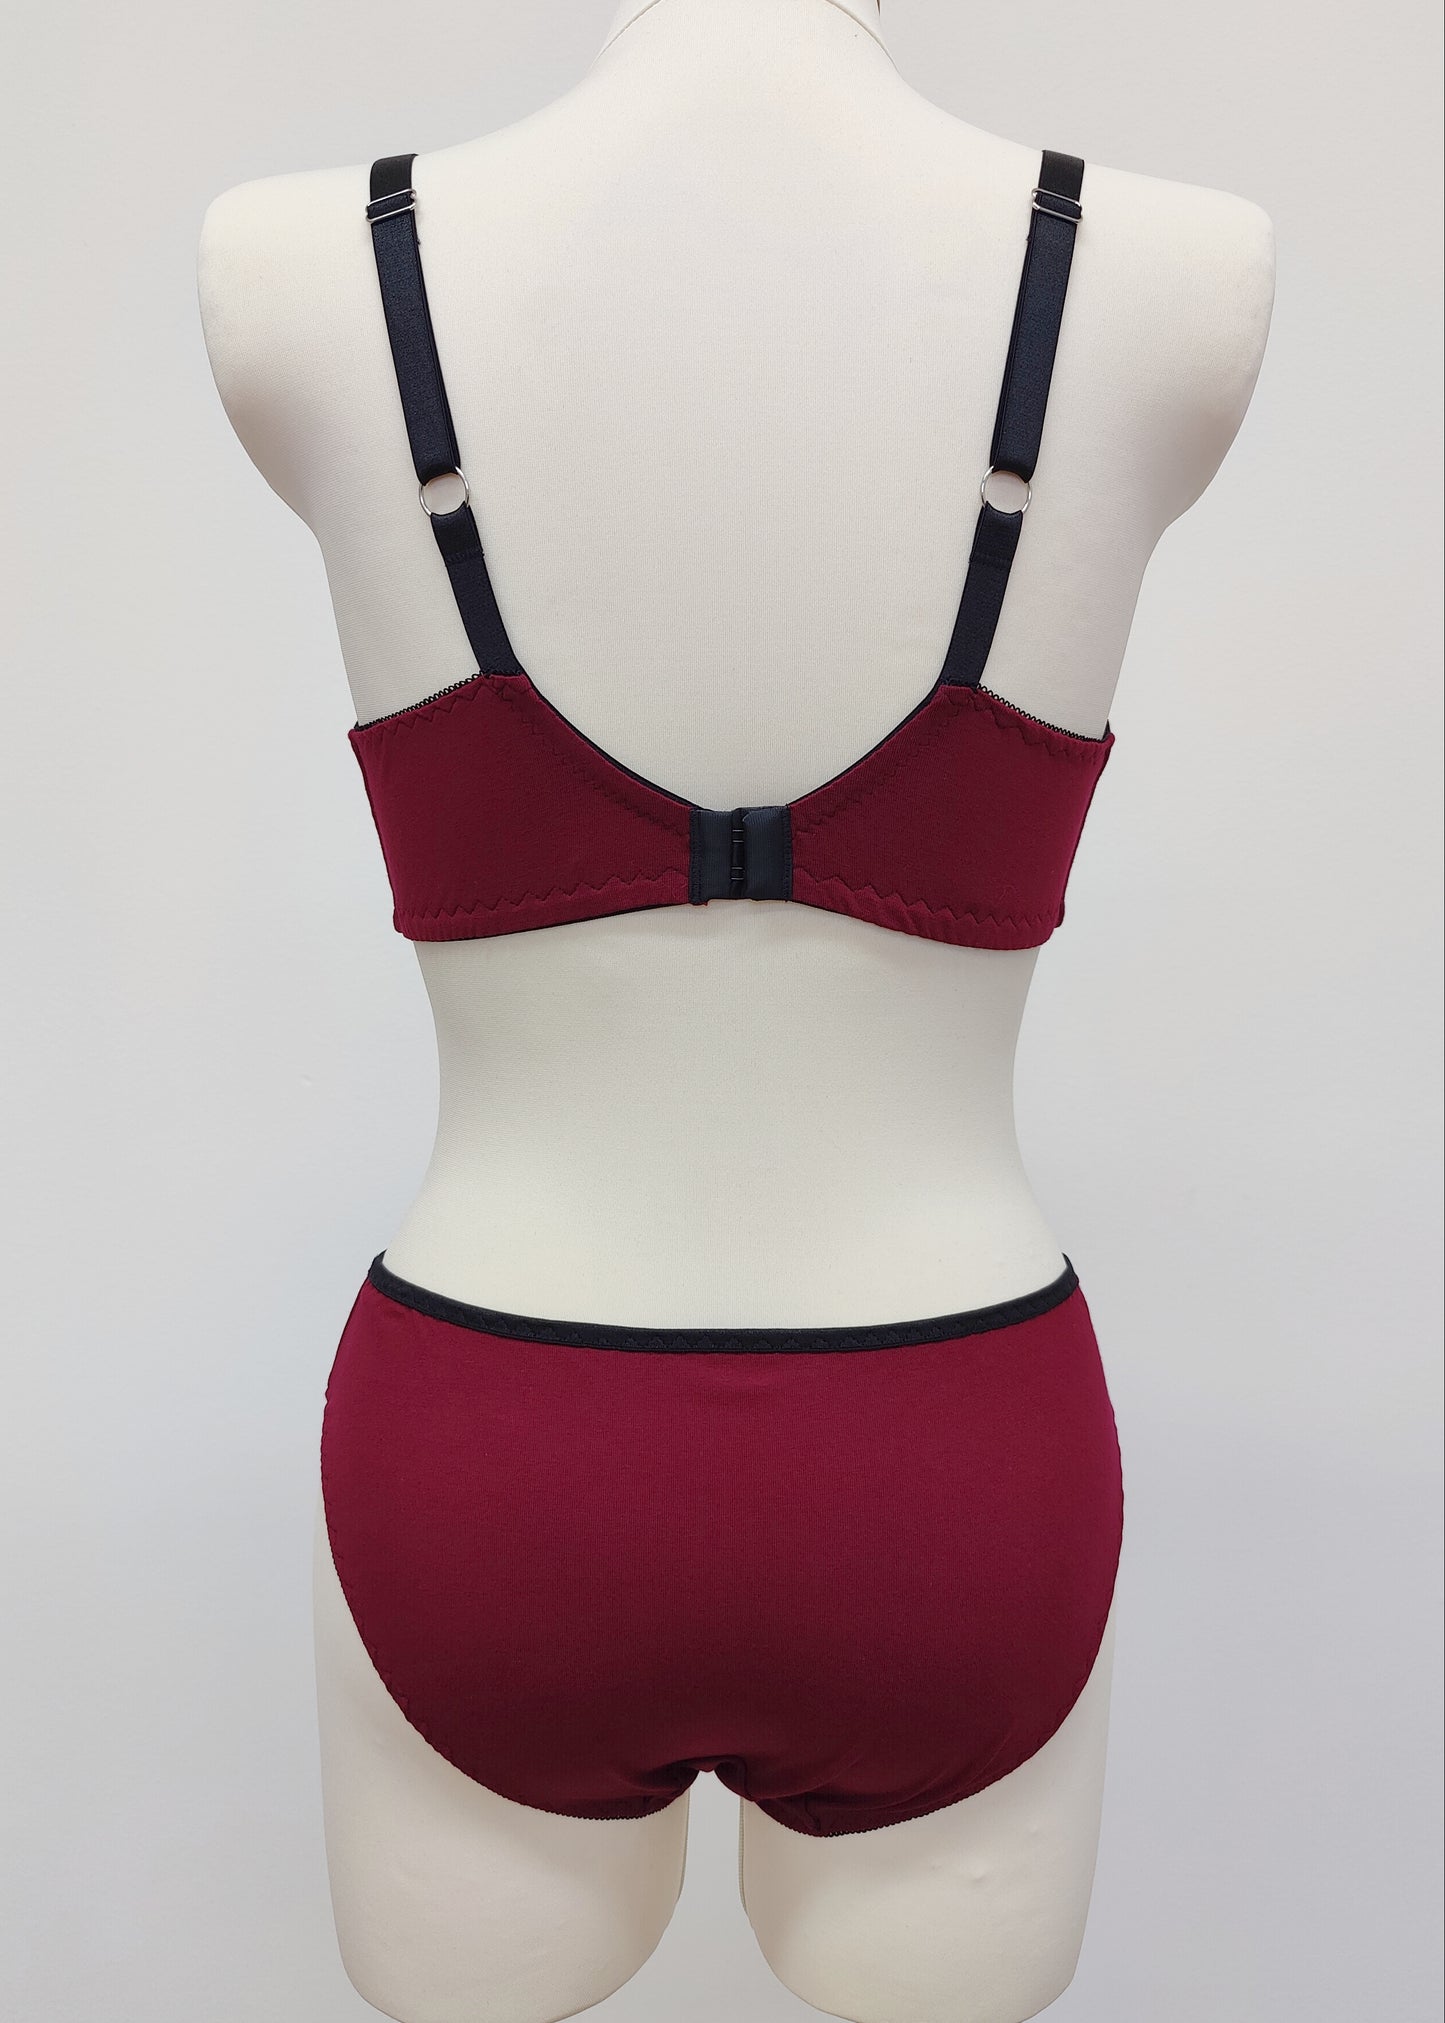 Classic Bikini, Tanga or High waist KIM Panties Burgundy red cotton S-XL